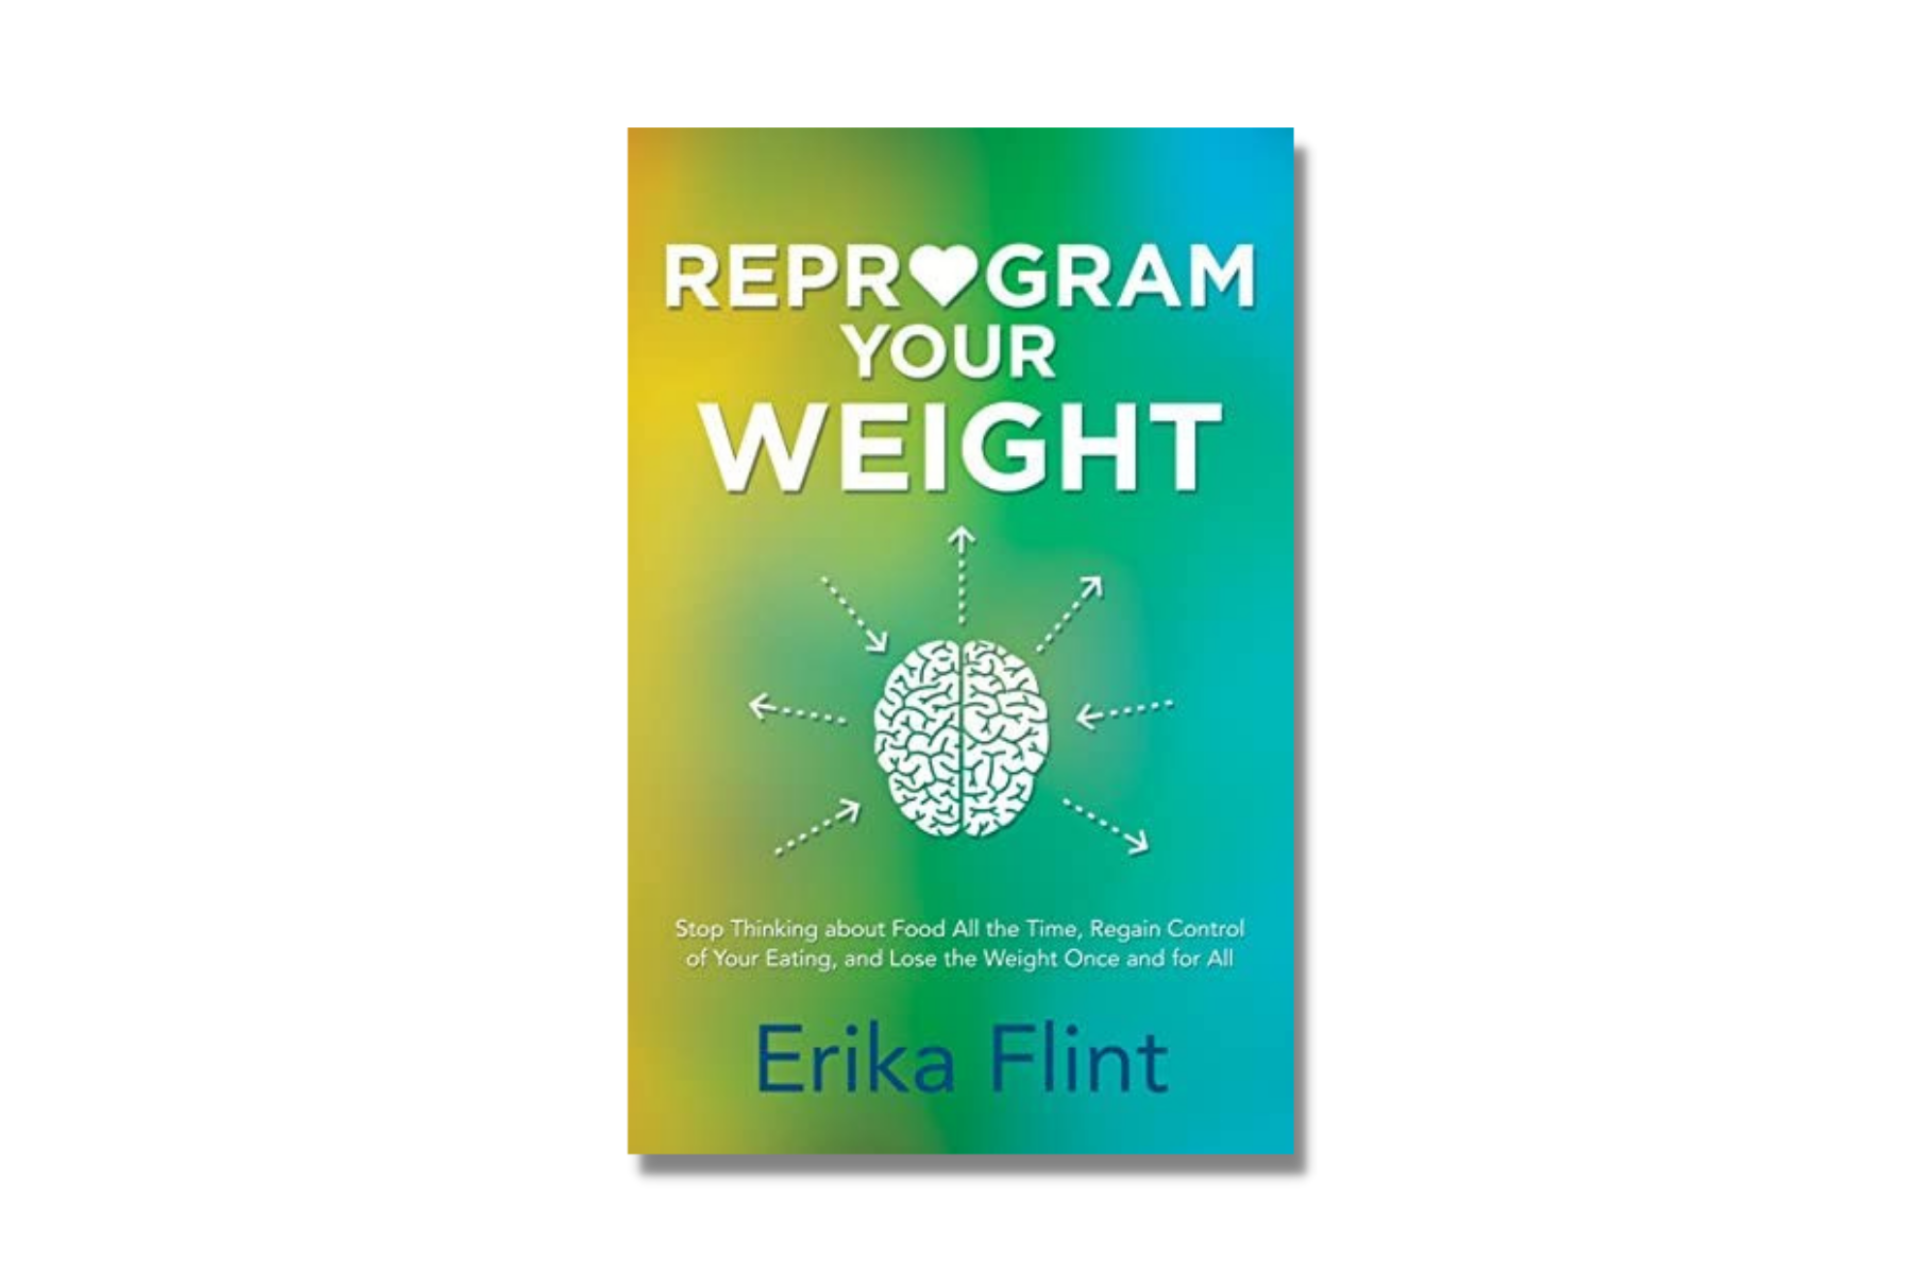 Reprogram Your Weight by Erika Flint